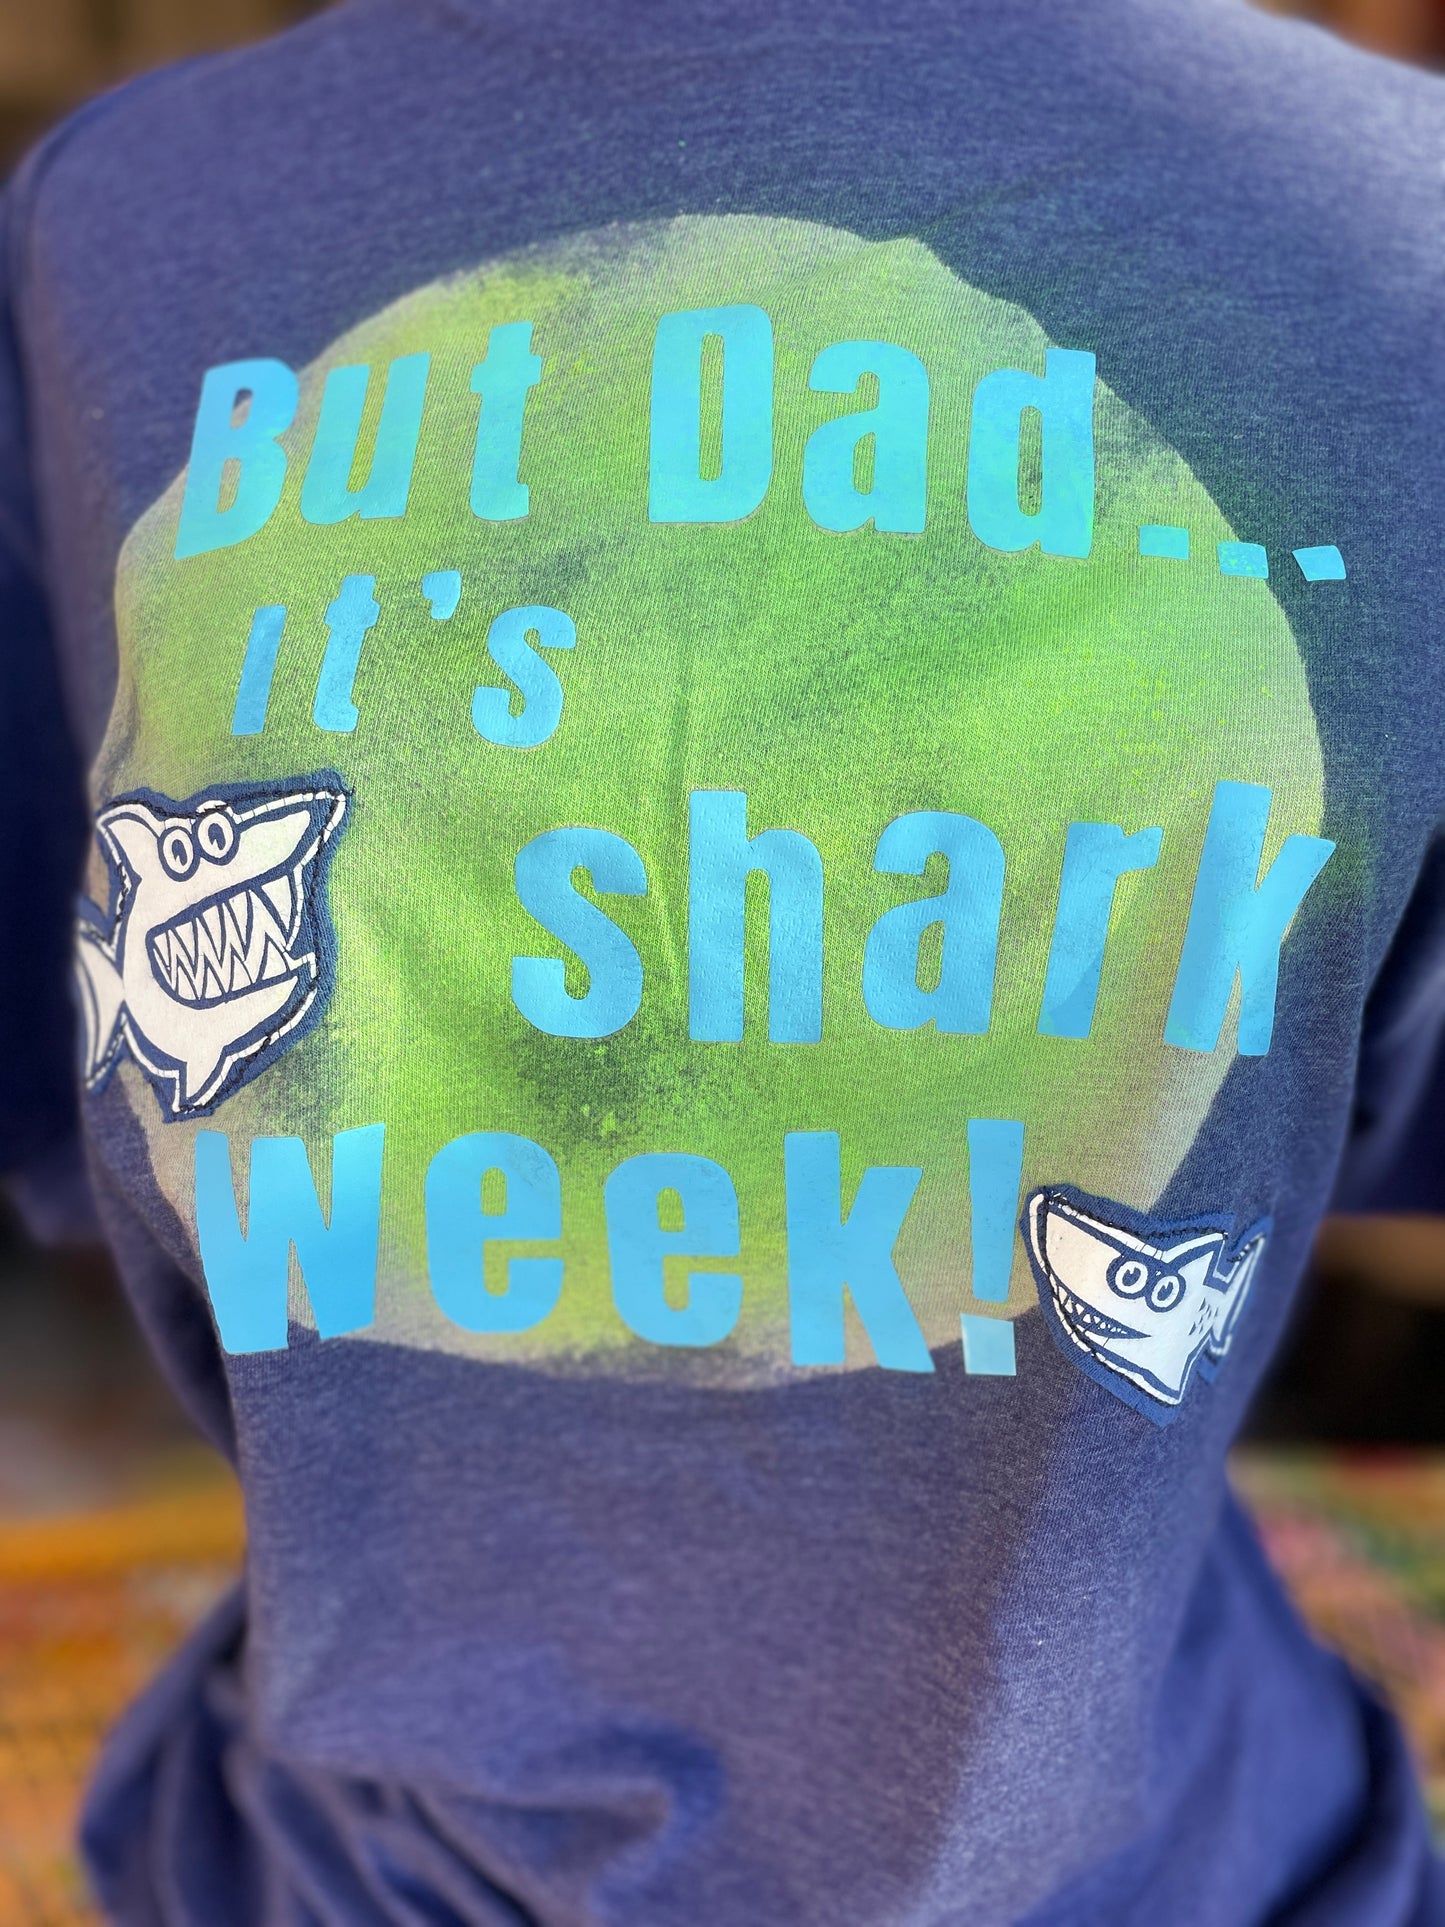 But dad....it's shark week